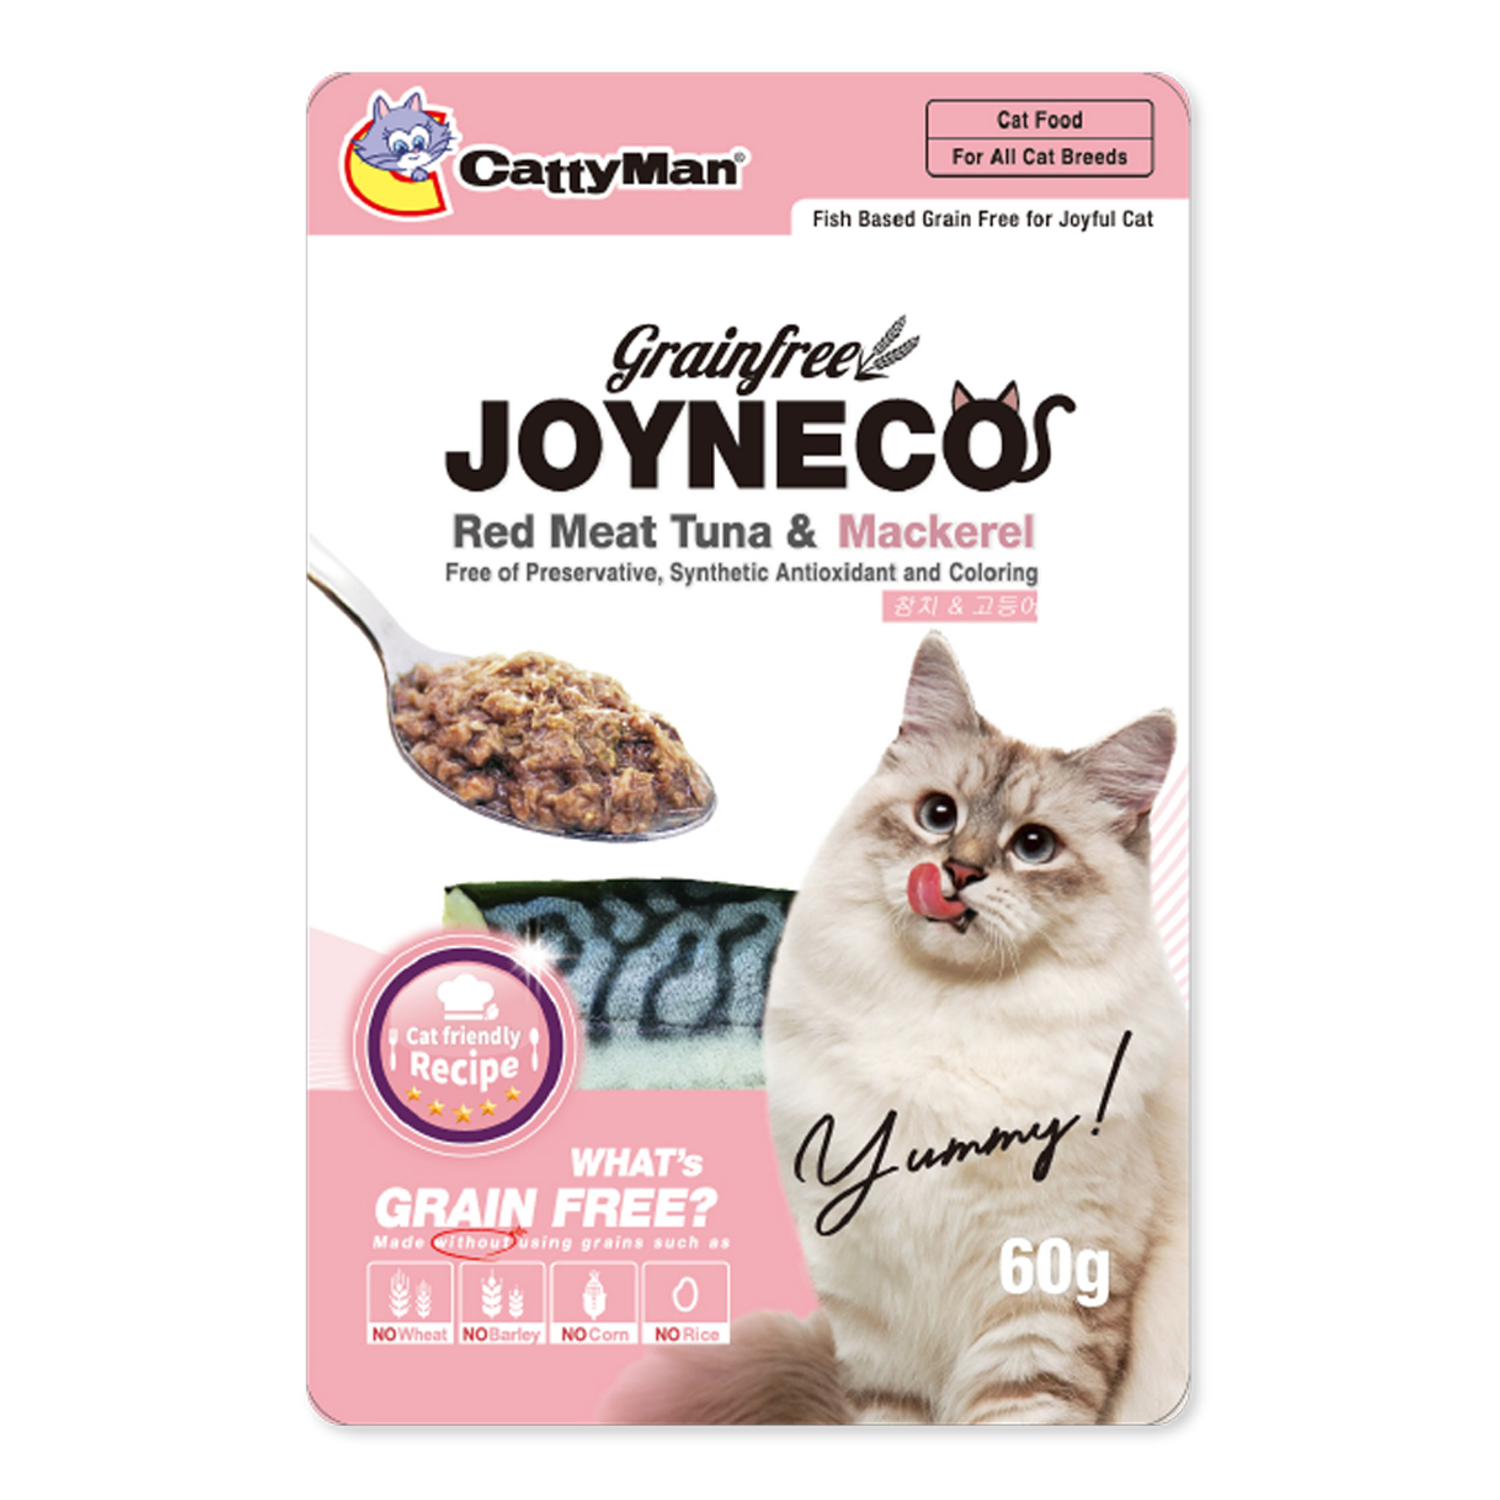 [DISCONTINUED] CattyMan Grain Free Joyneco (Red Meat Tuna & Mackerel) Pouch - 60g